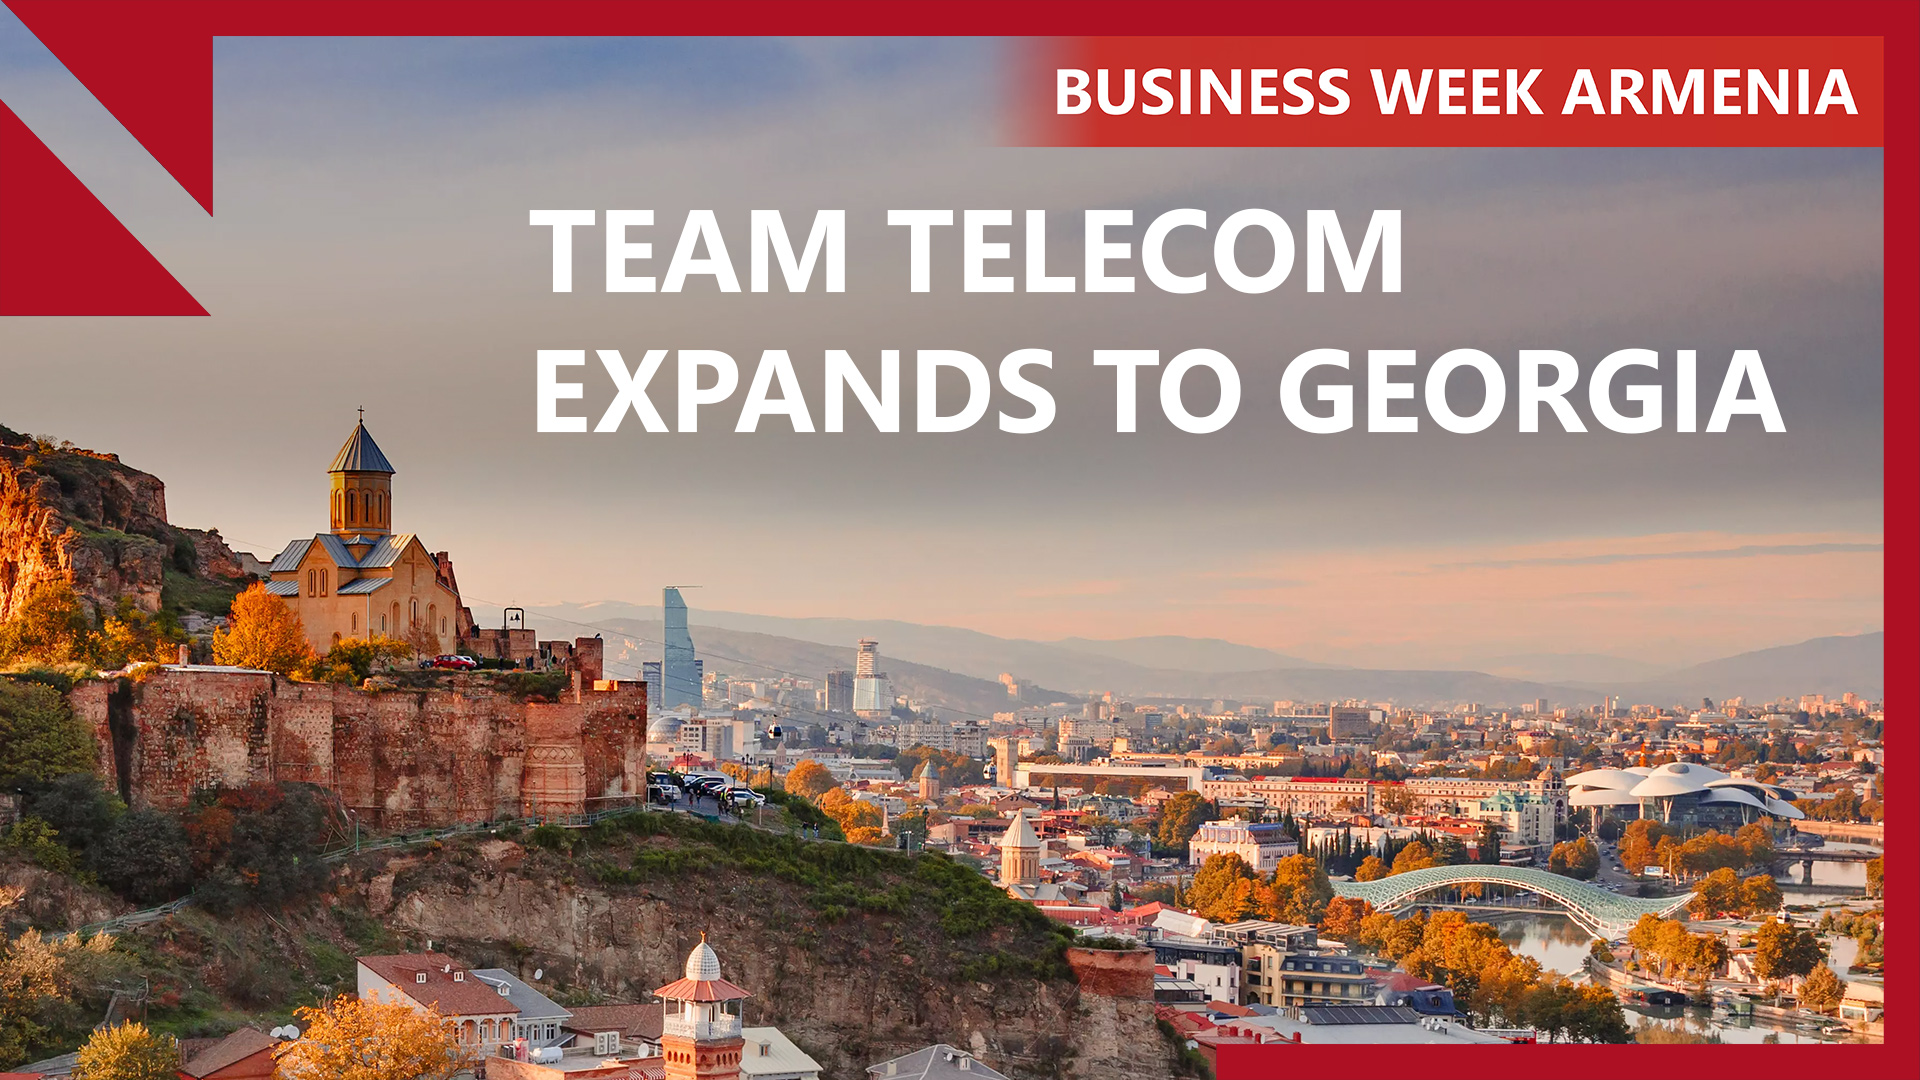 Leading Armenian mobile network operator takes stake in Georgia: Business Week Armenia